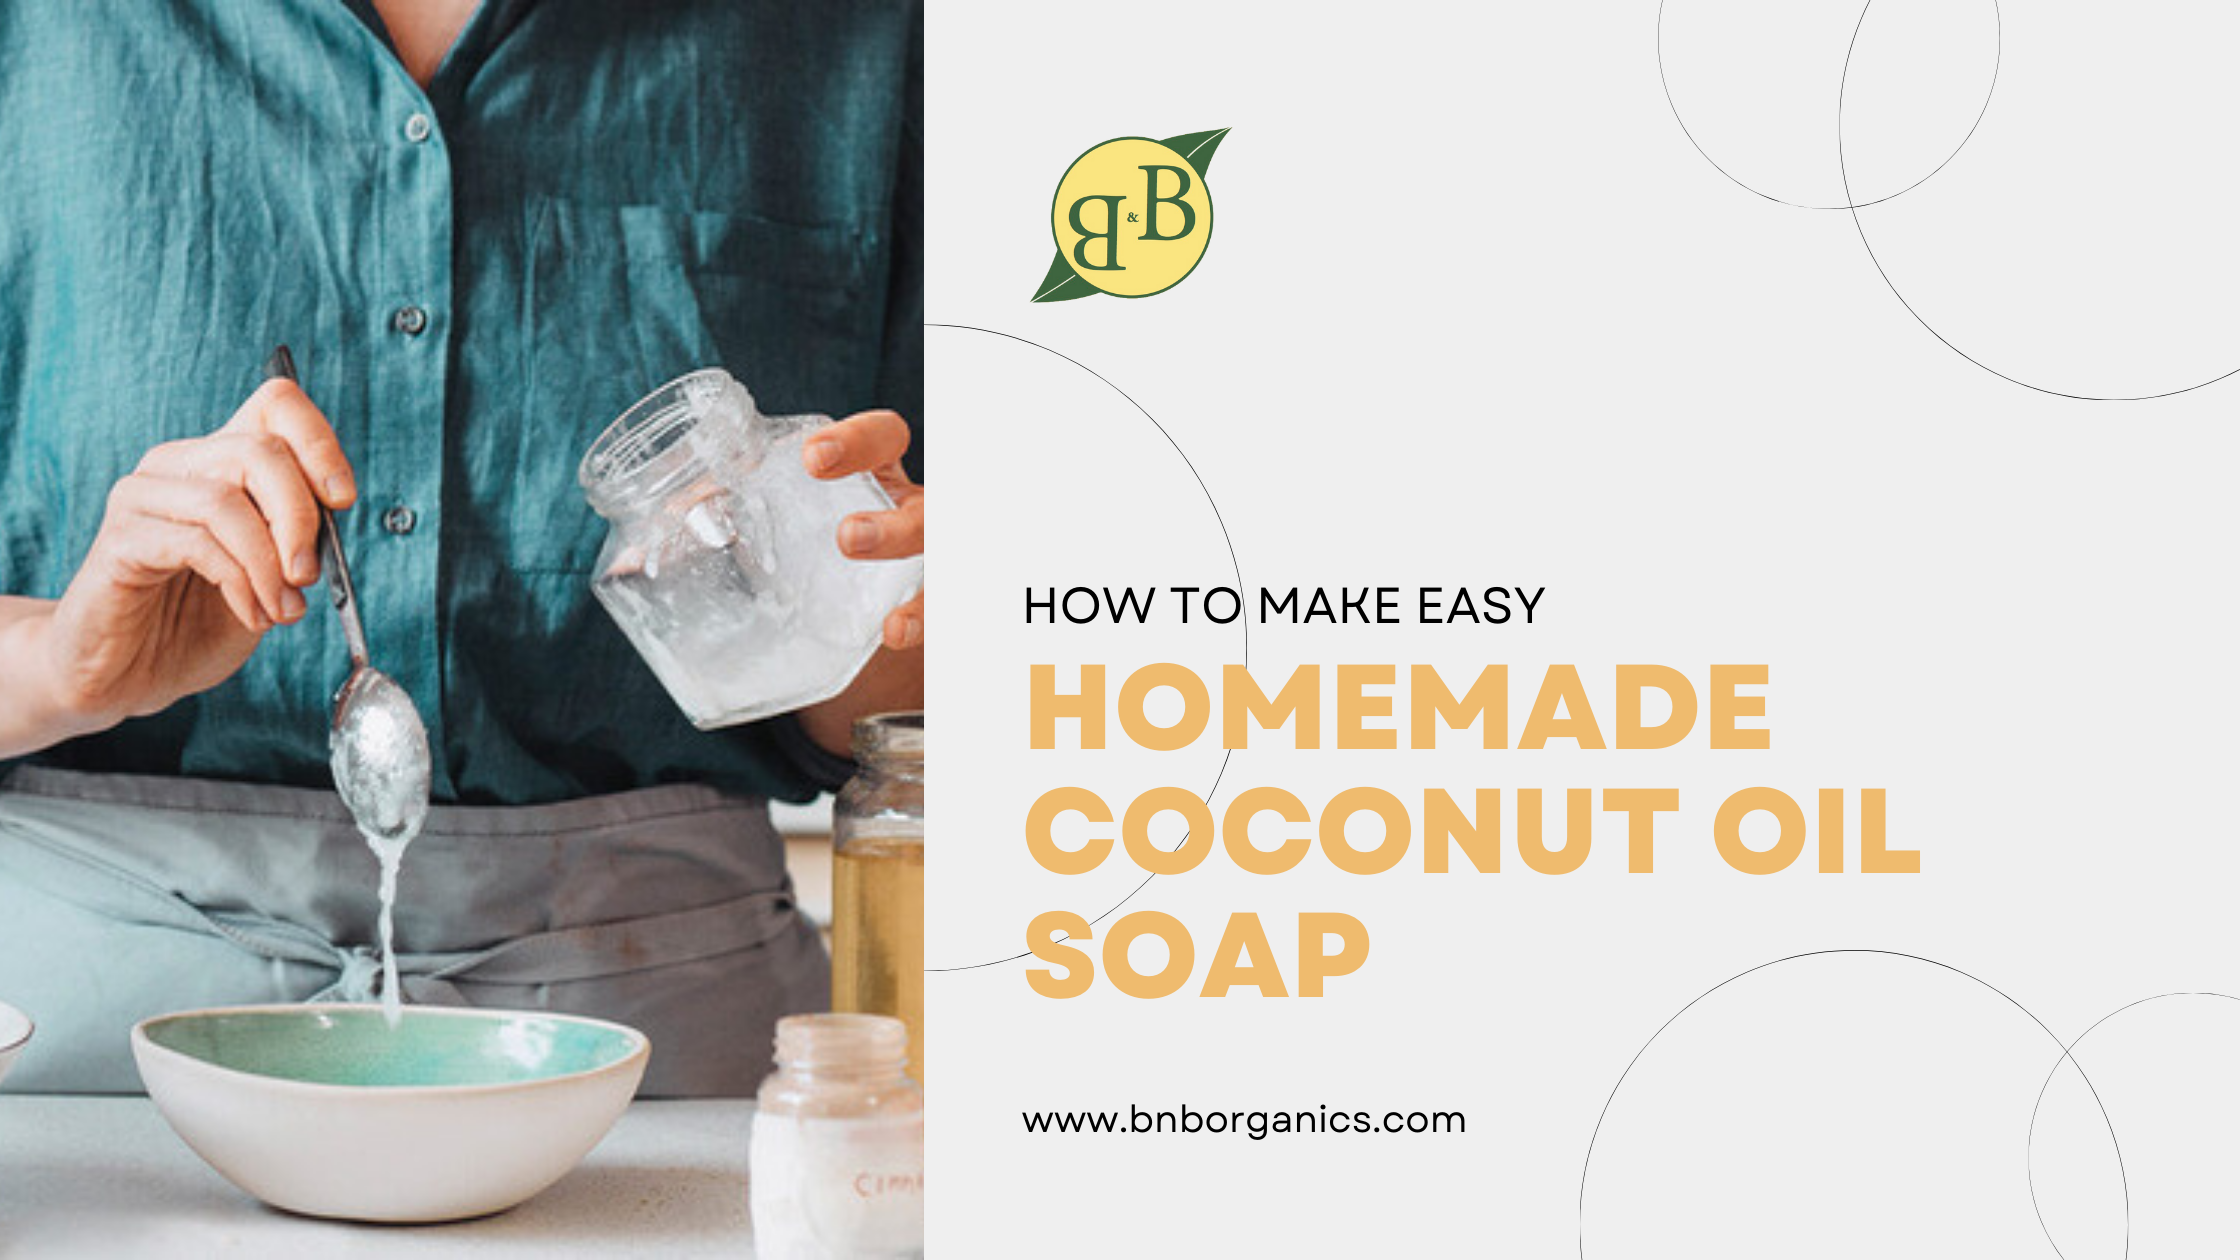 How to Make Easy Homemade Coconut Oil Soap - FeltMagnet